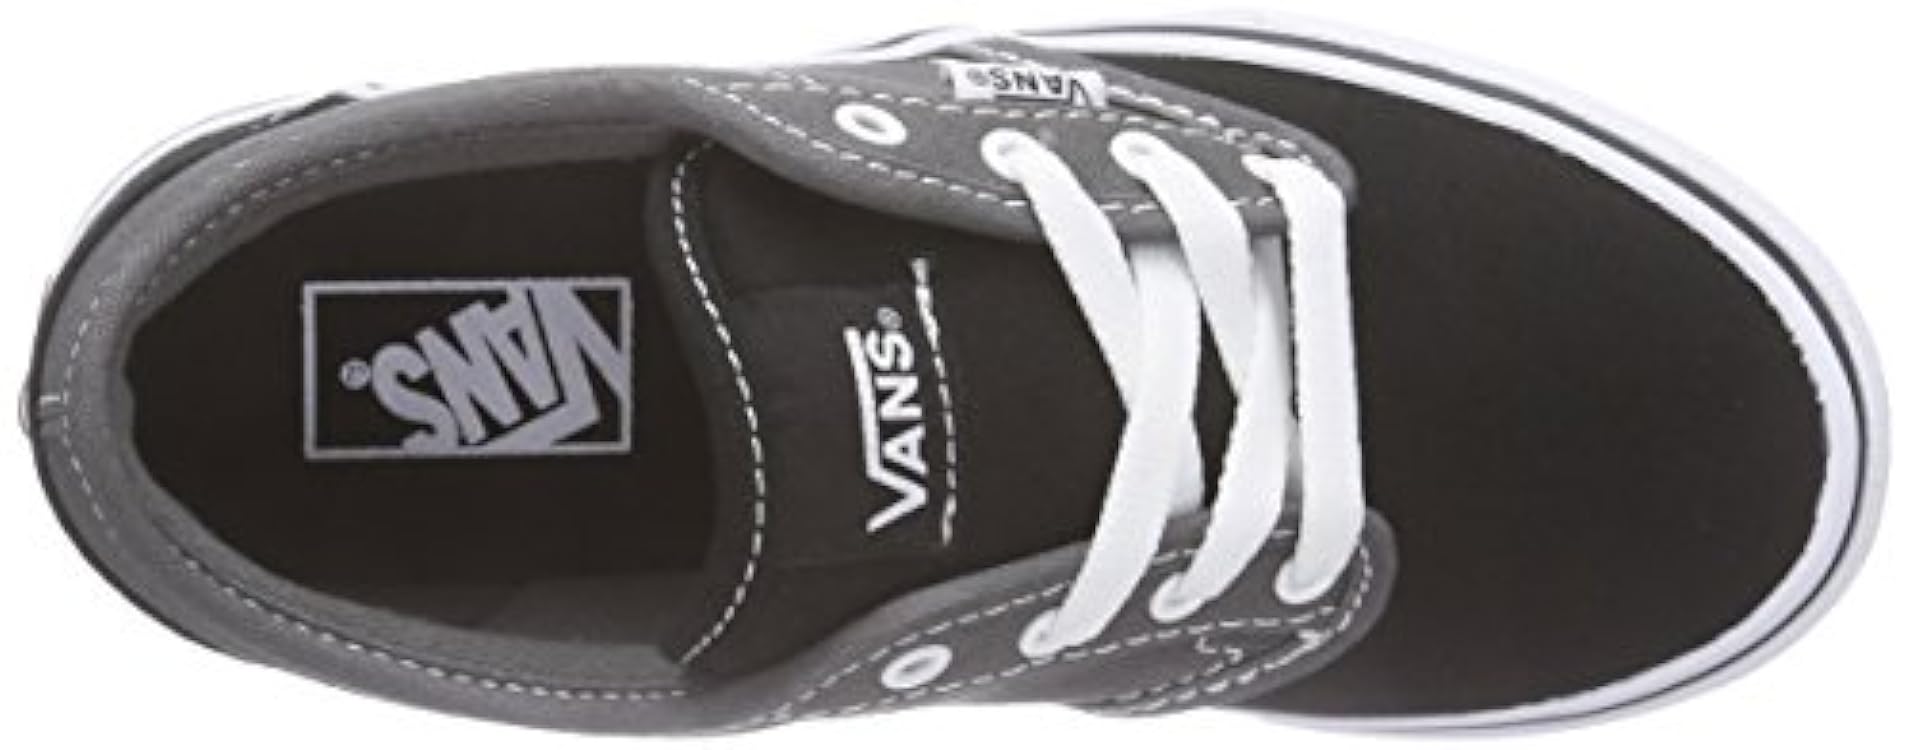 Vans Atwood, Sneakers Basse Uomo 707576937